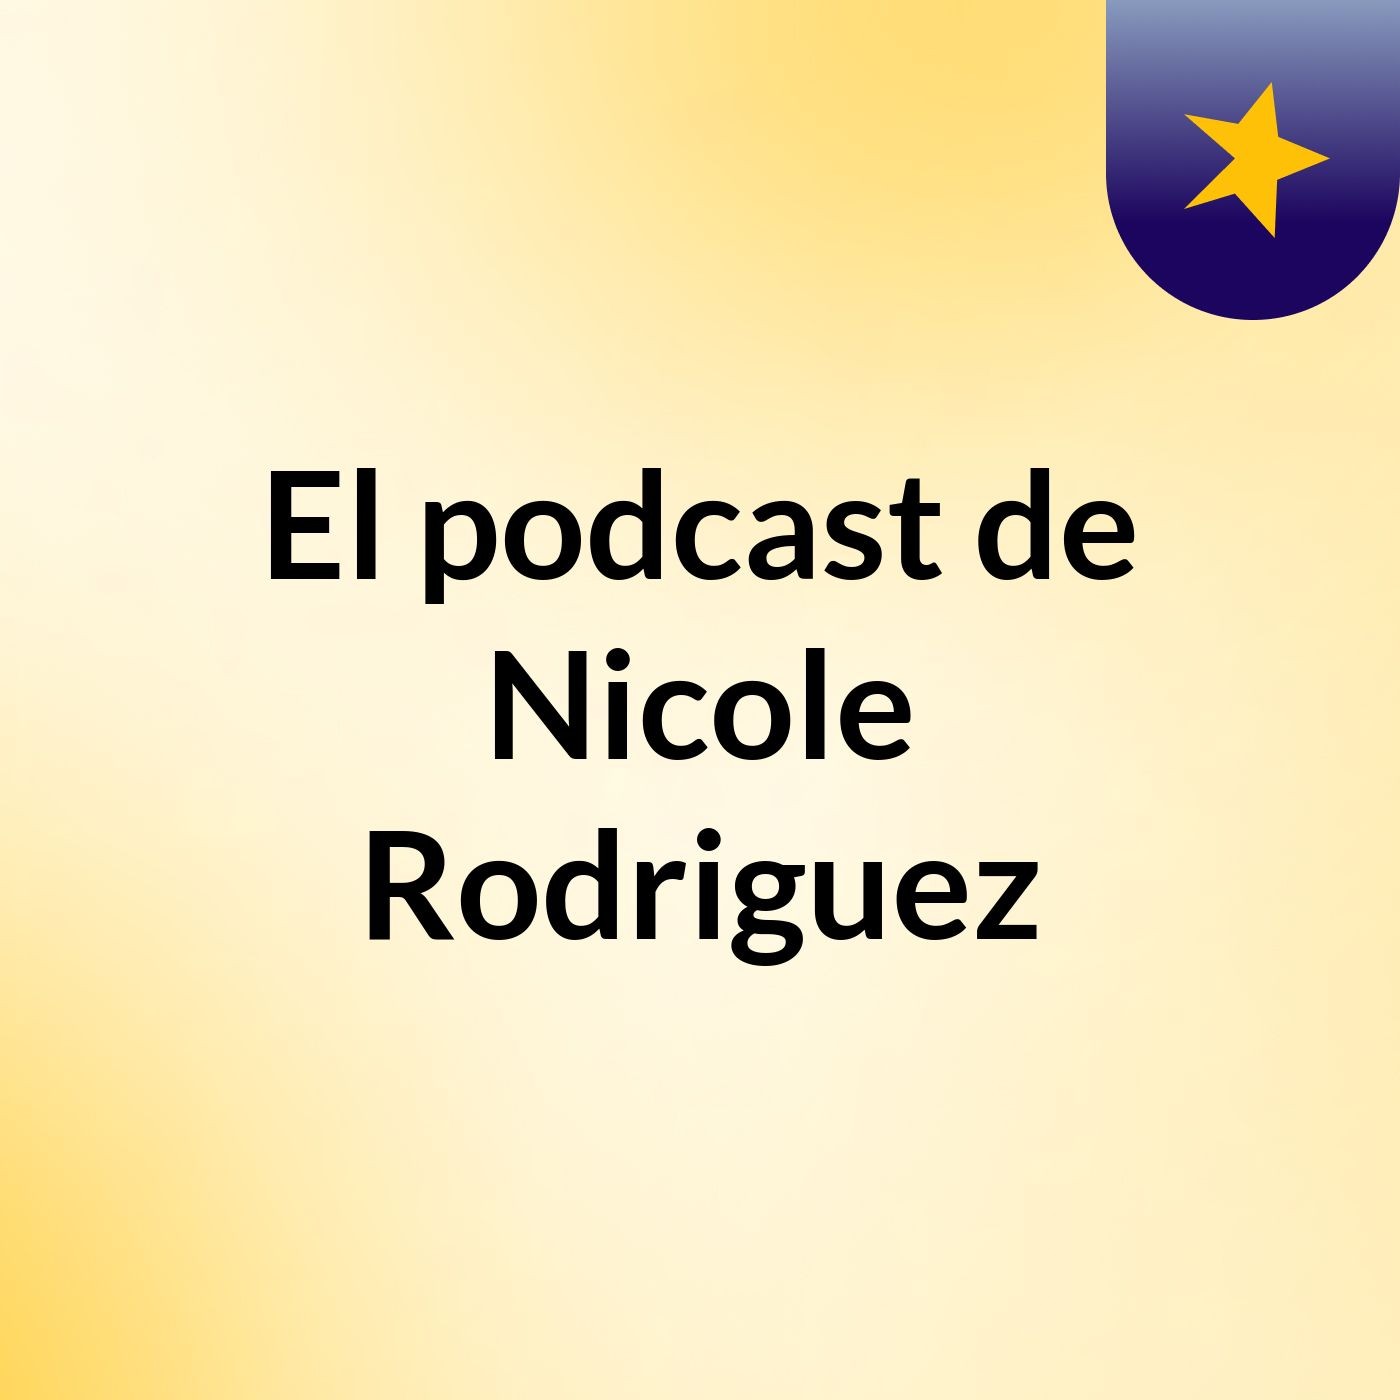 El podcast de Nicole Rodriguez